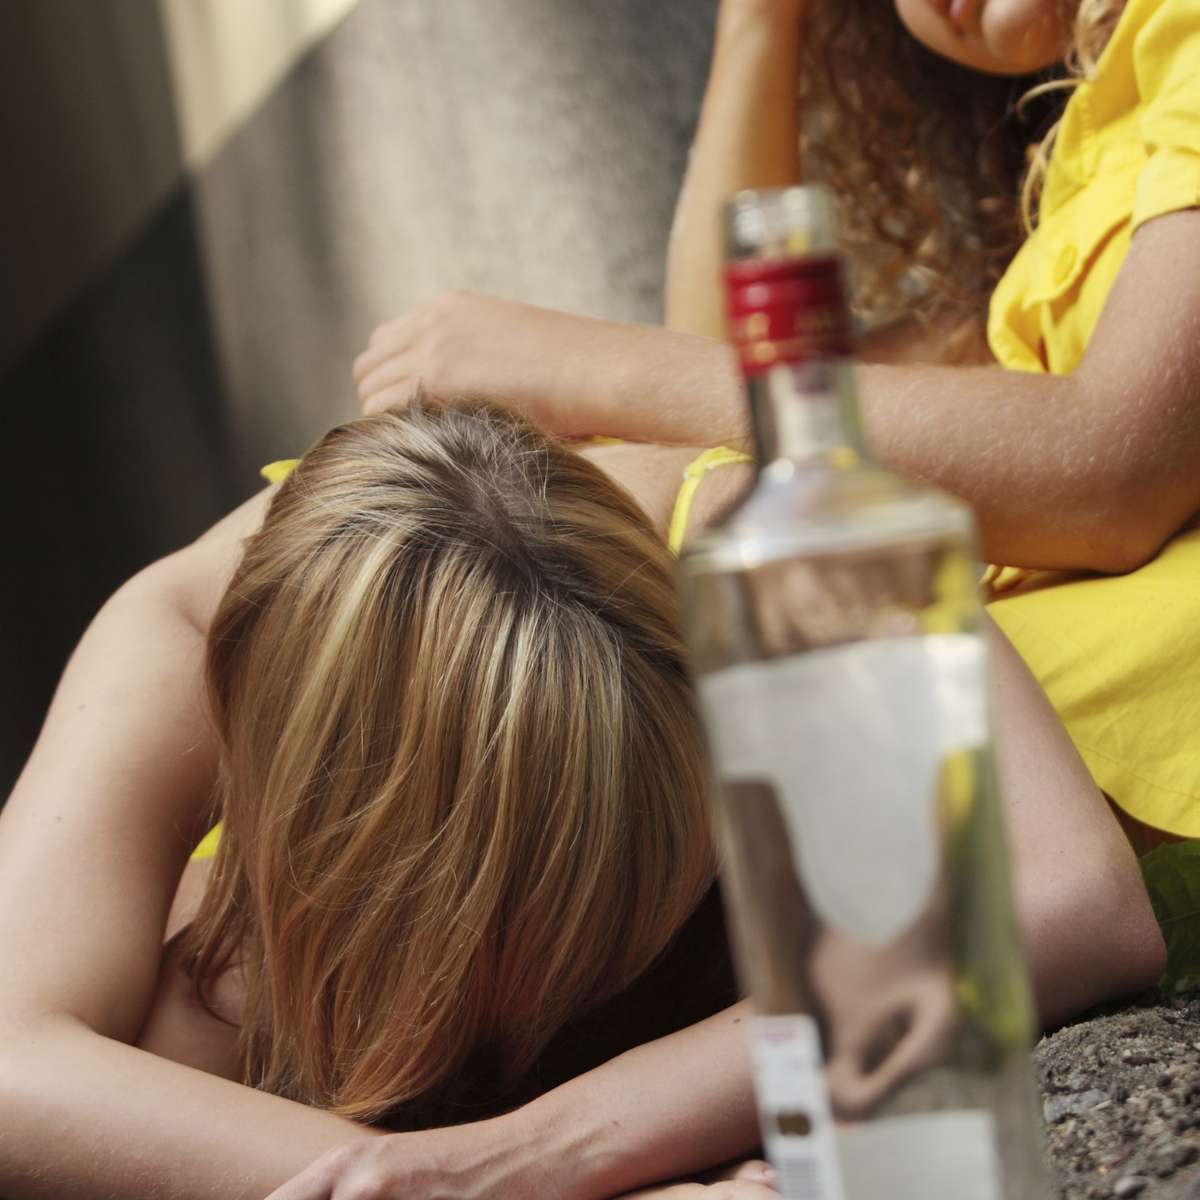 Consumo de álcool por vias anal e vaginal preocupa médicos foto